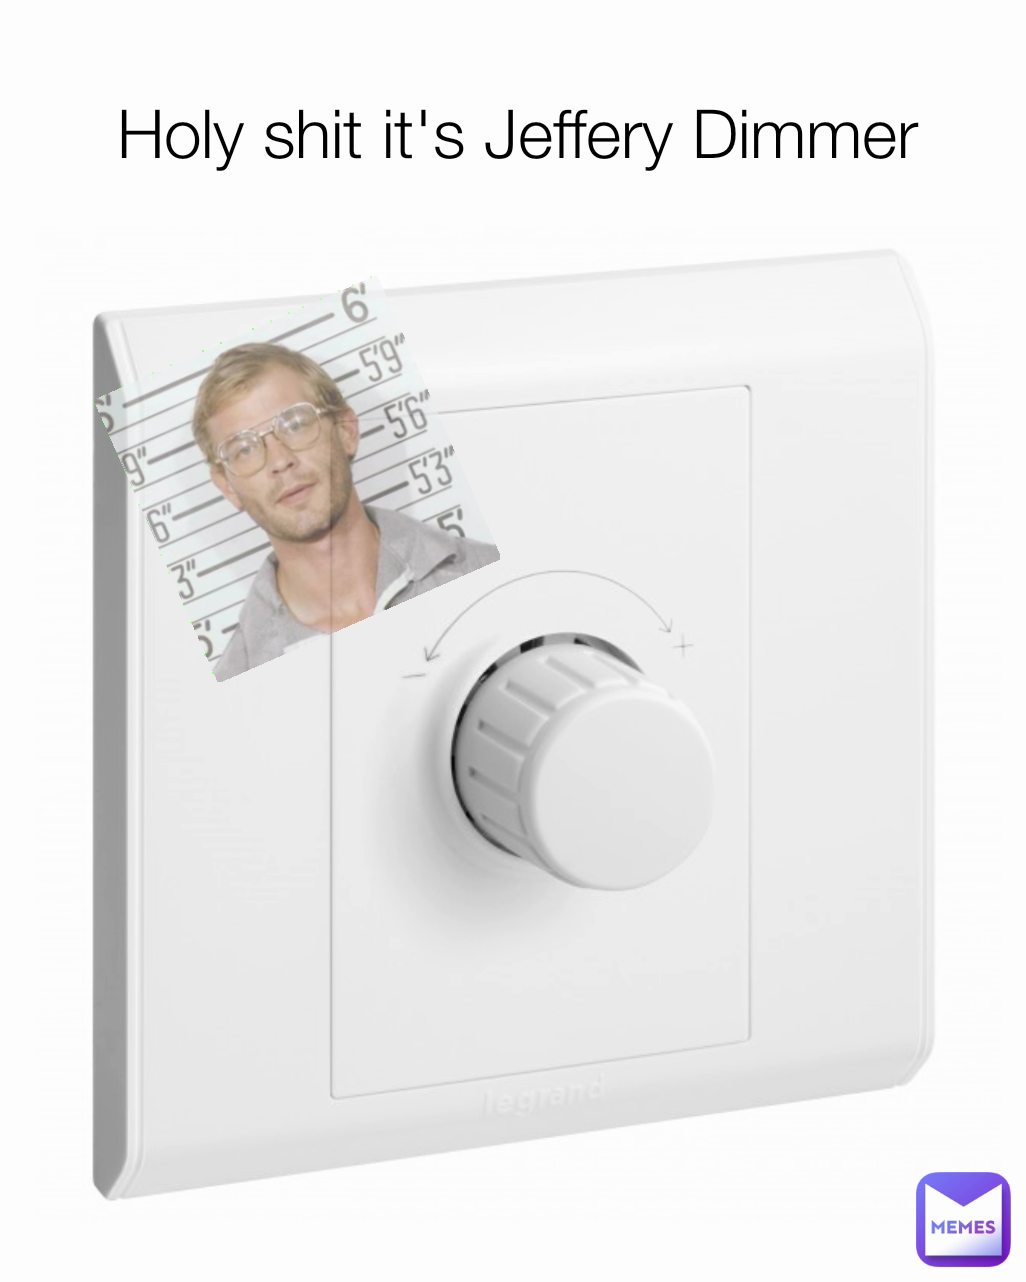 Holy shit it's Jeffery Dimmer